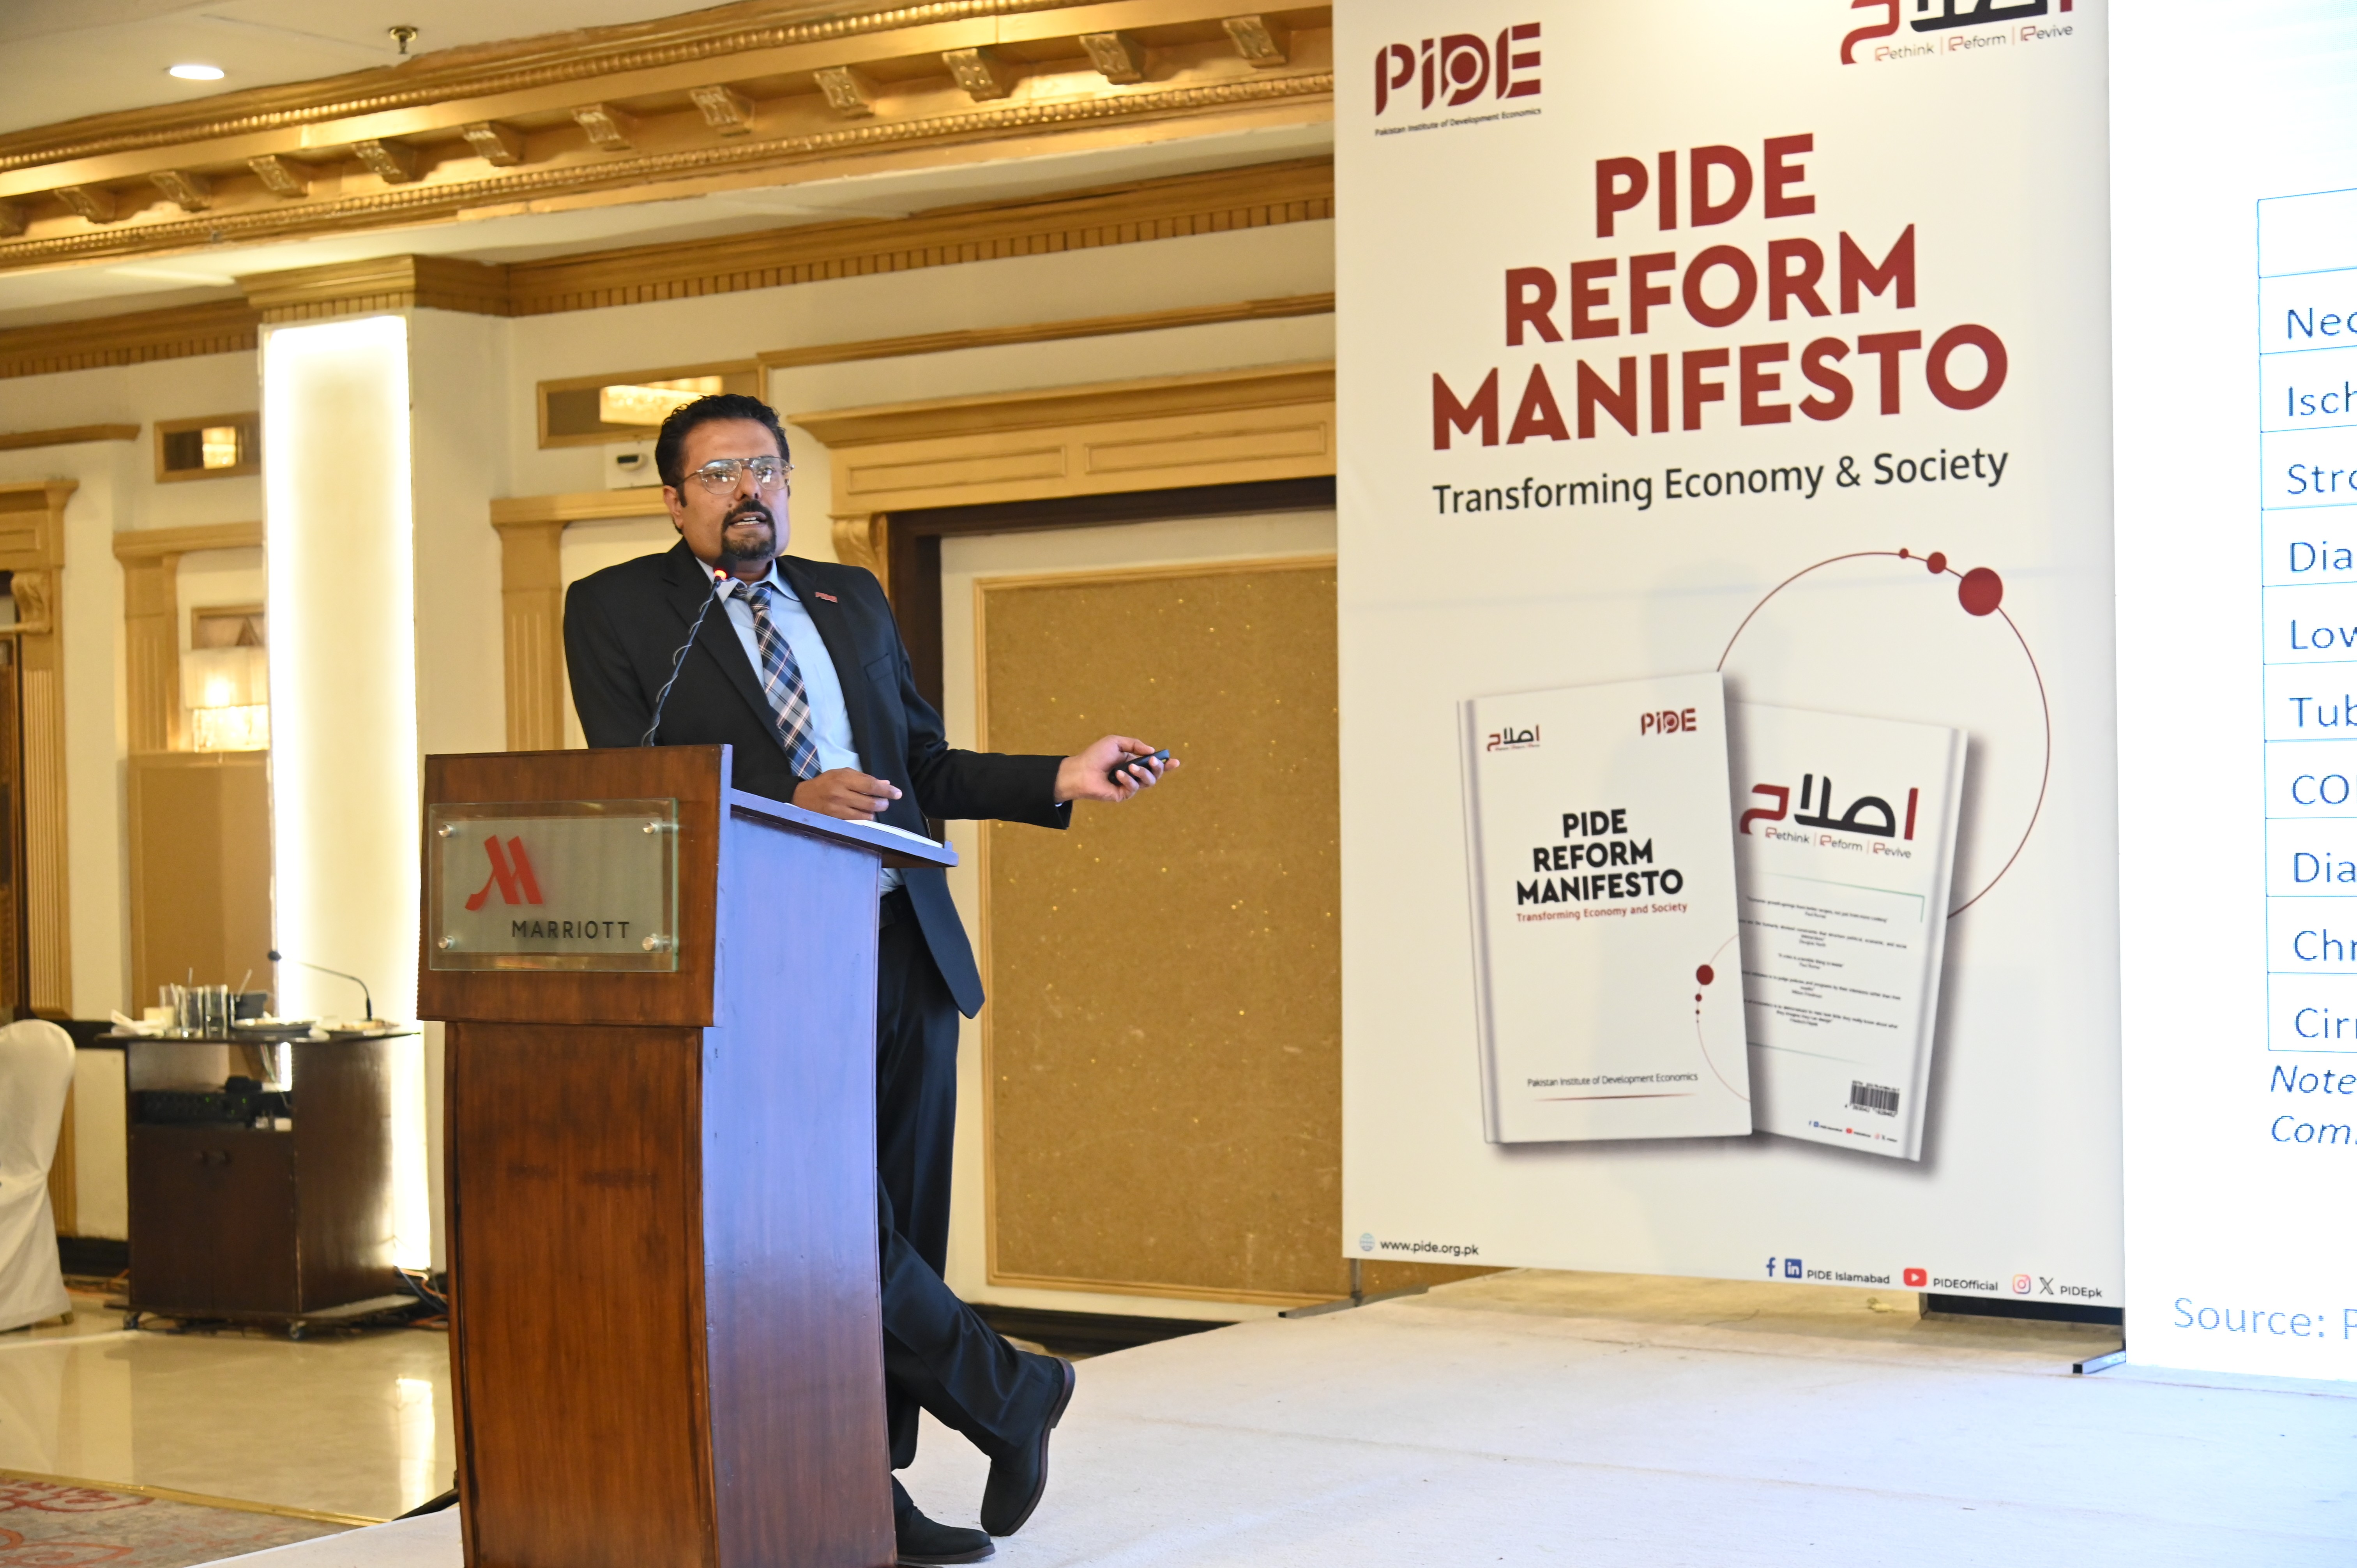 Ahmed Waqar Qasim, Senior Research Economist at PIDE expressing his views on the reform manifesto